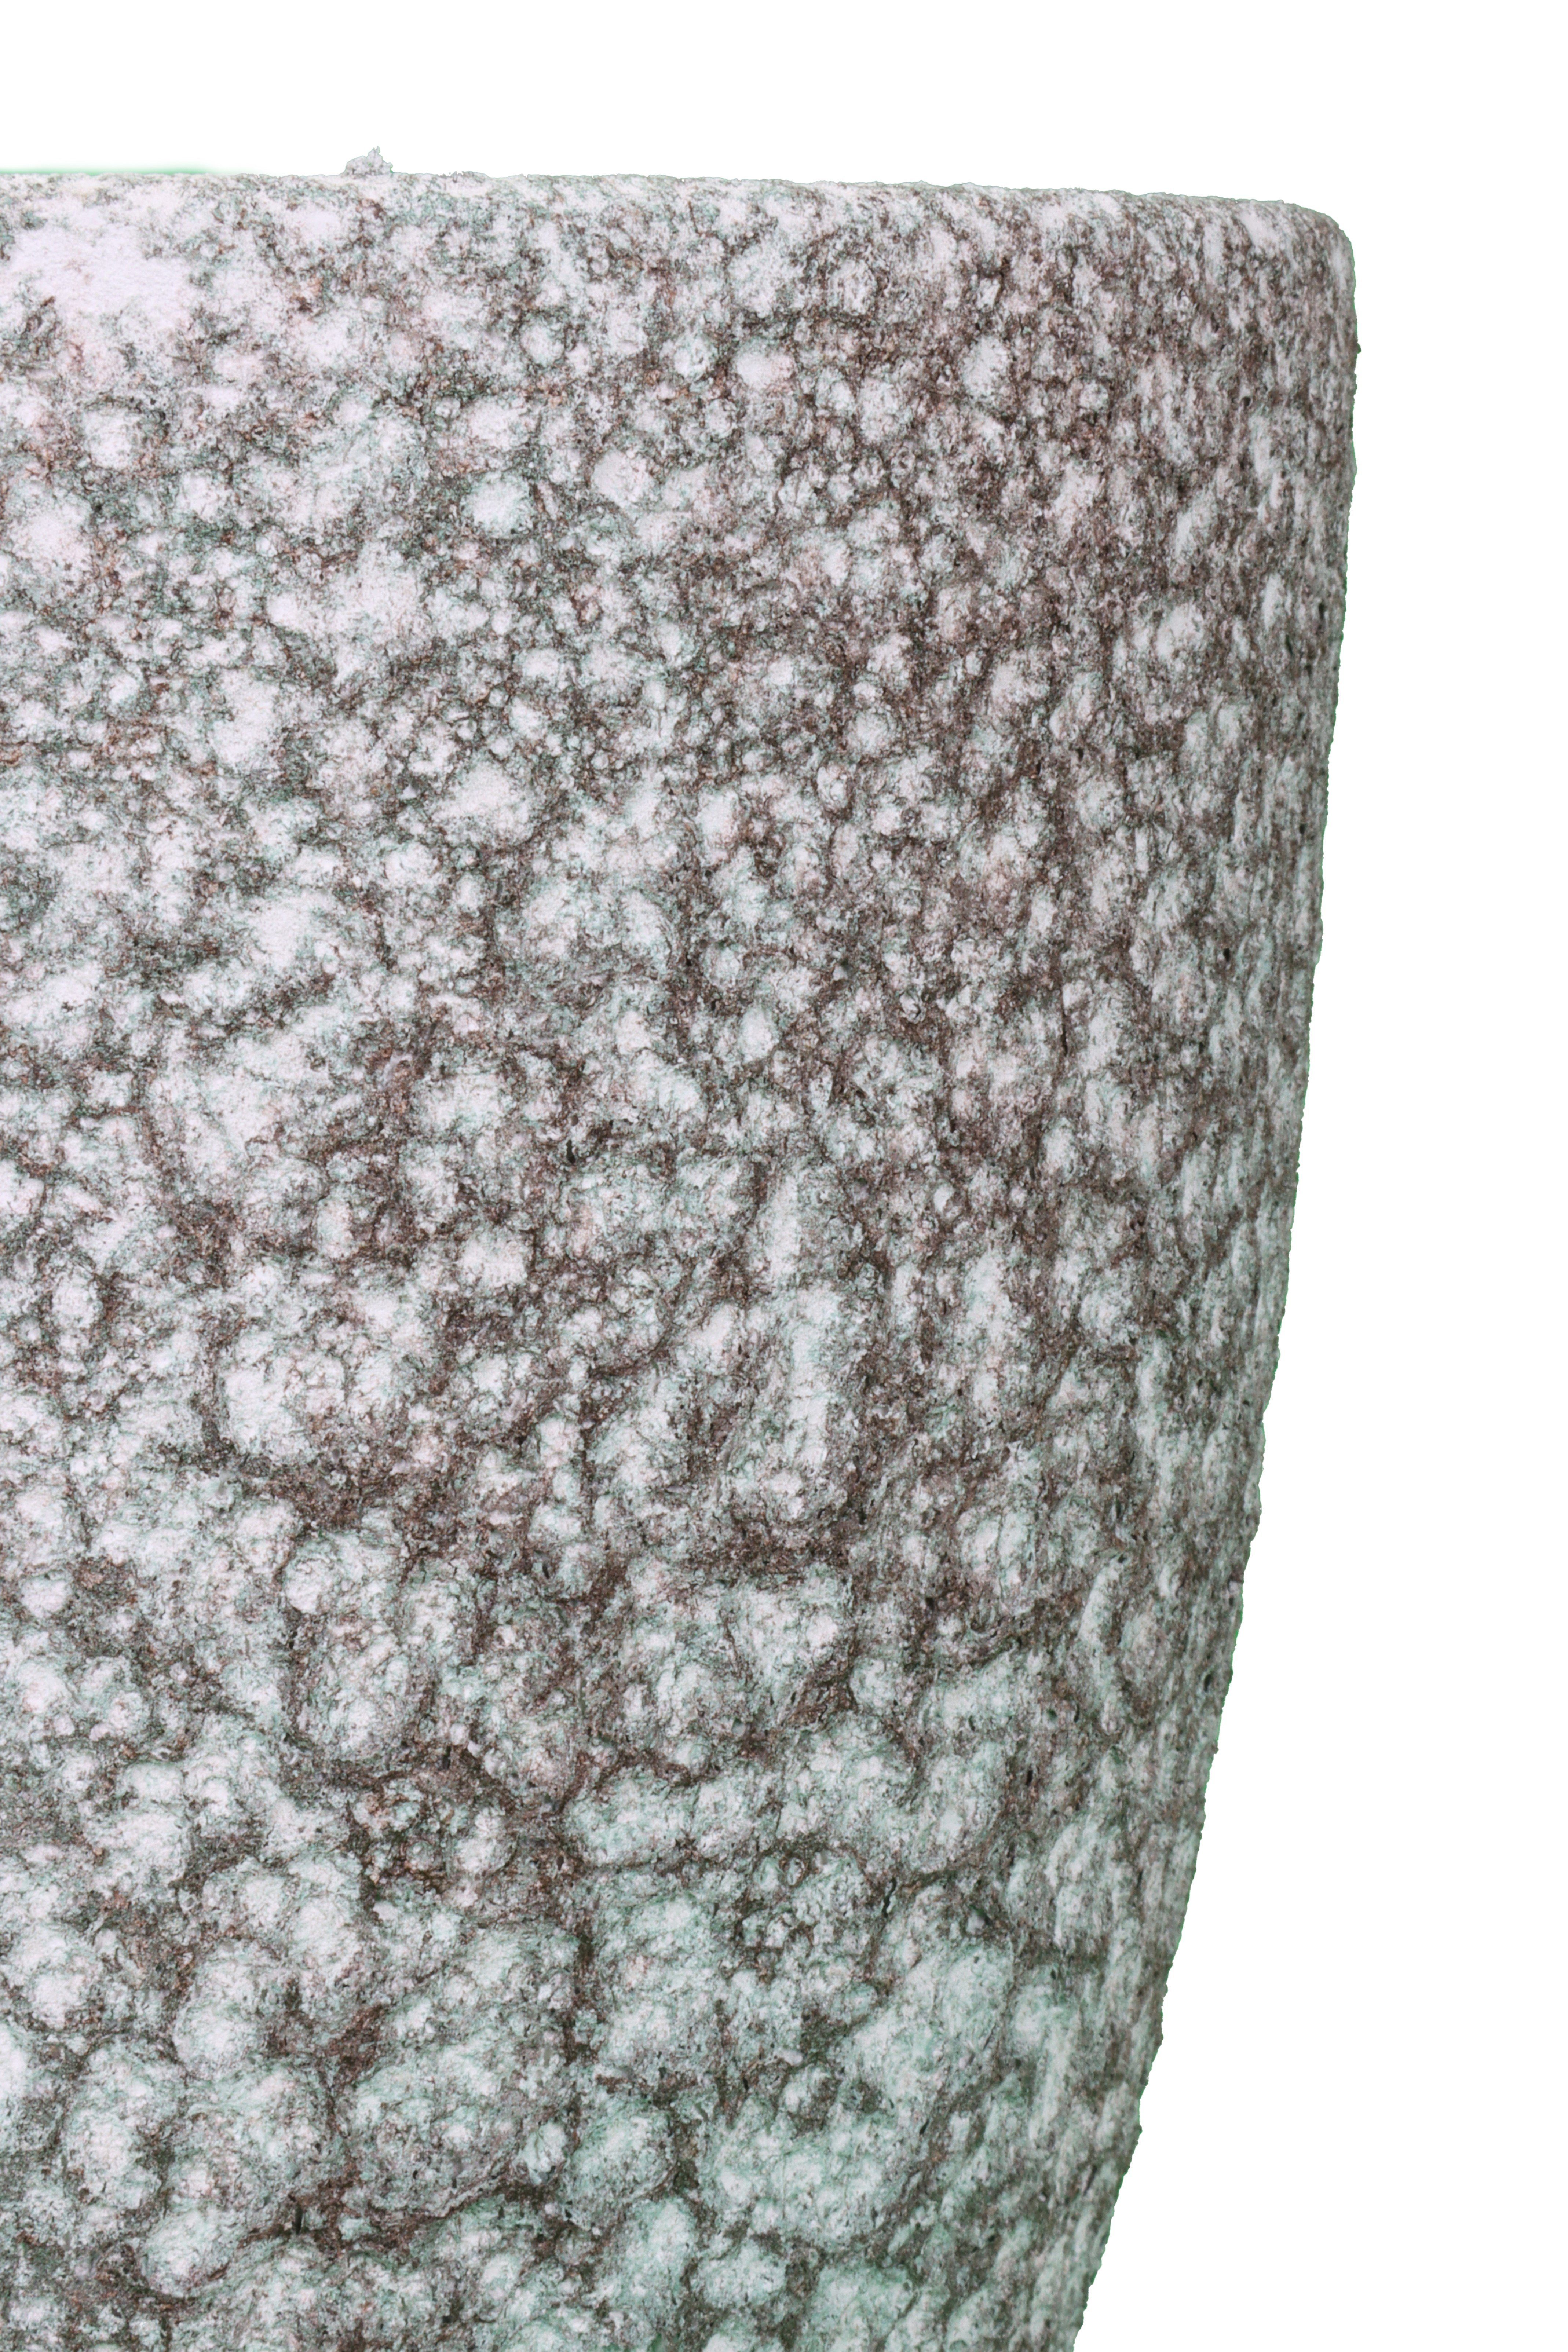 Multicolor Struktur tegawo Übertopf in Steinoptik Vulcano konisch Vase handgefertigt mit Portugal,